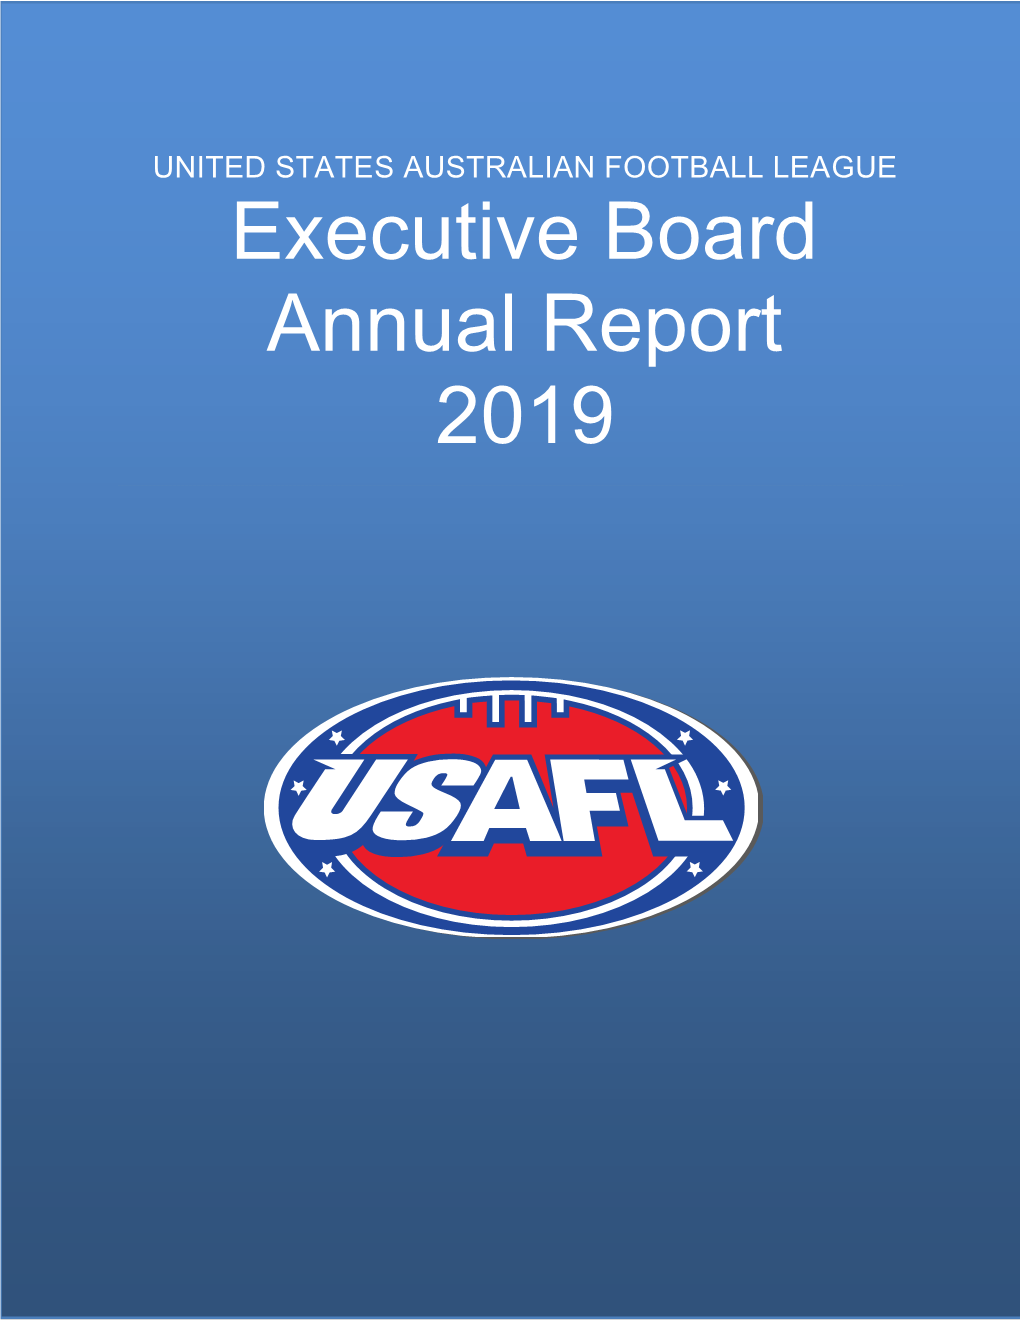 USAFL 2019 Annual Report